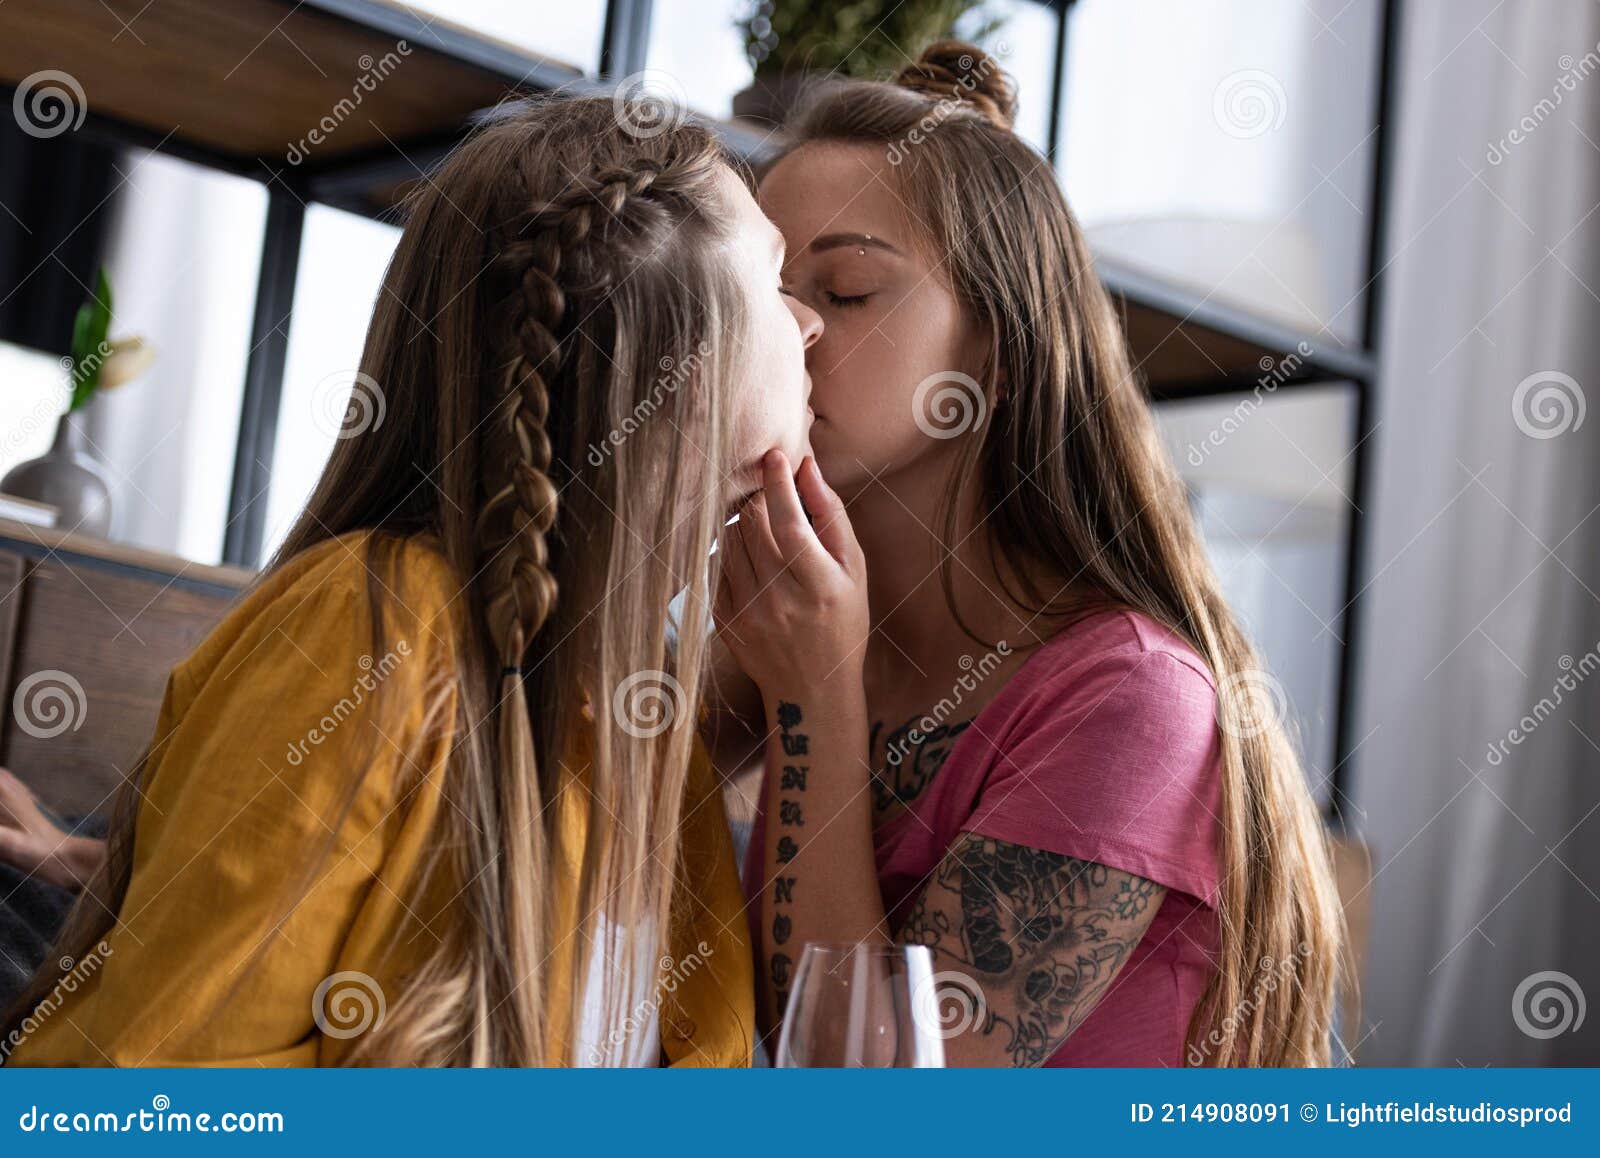 469 Lesbians Kissing Stock Photos